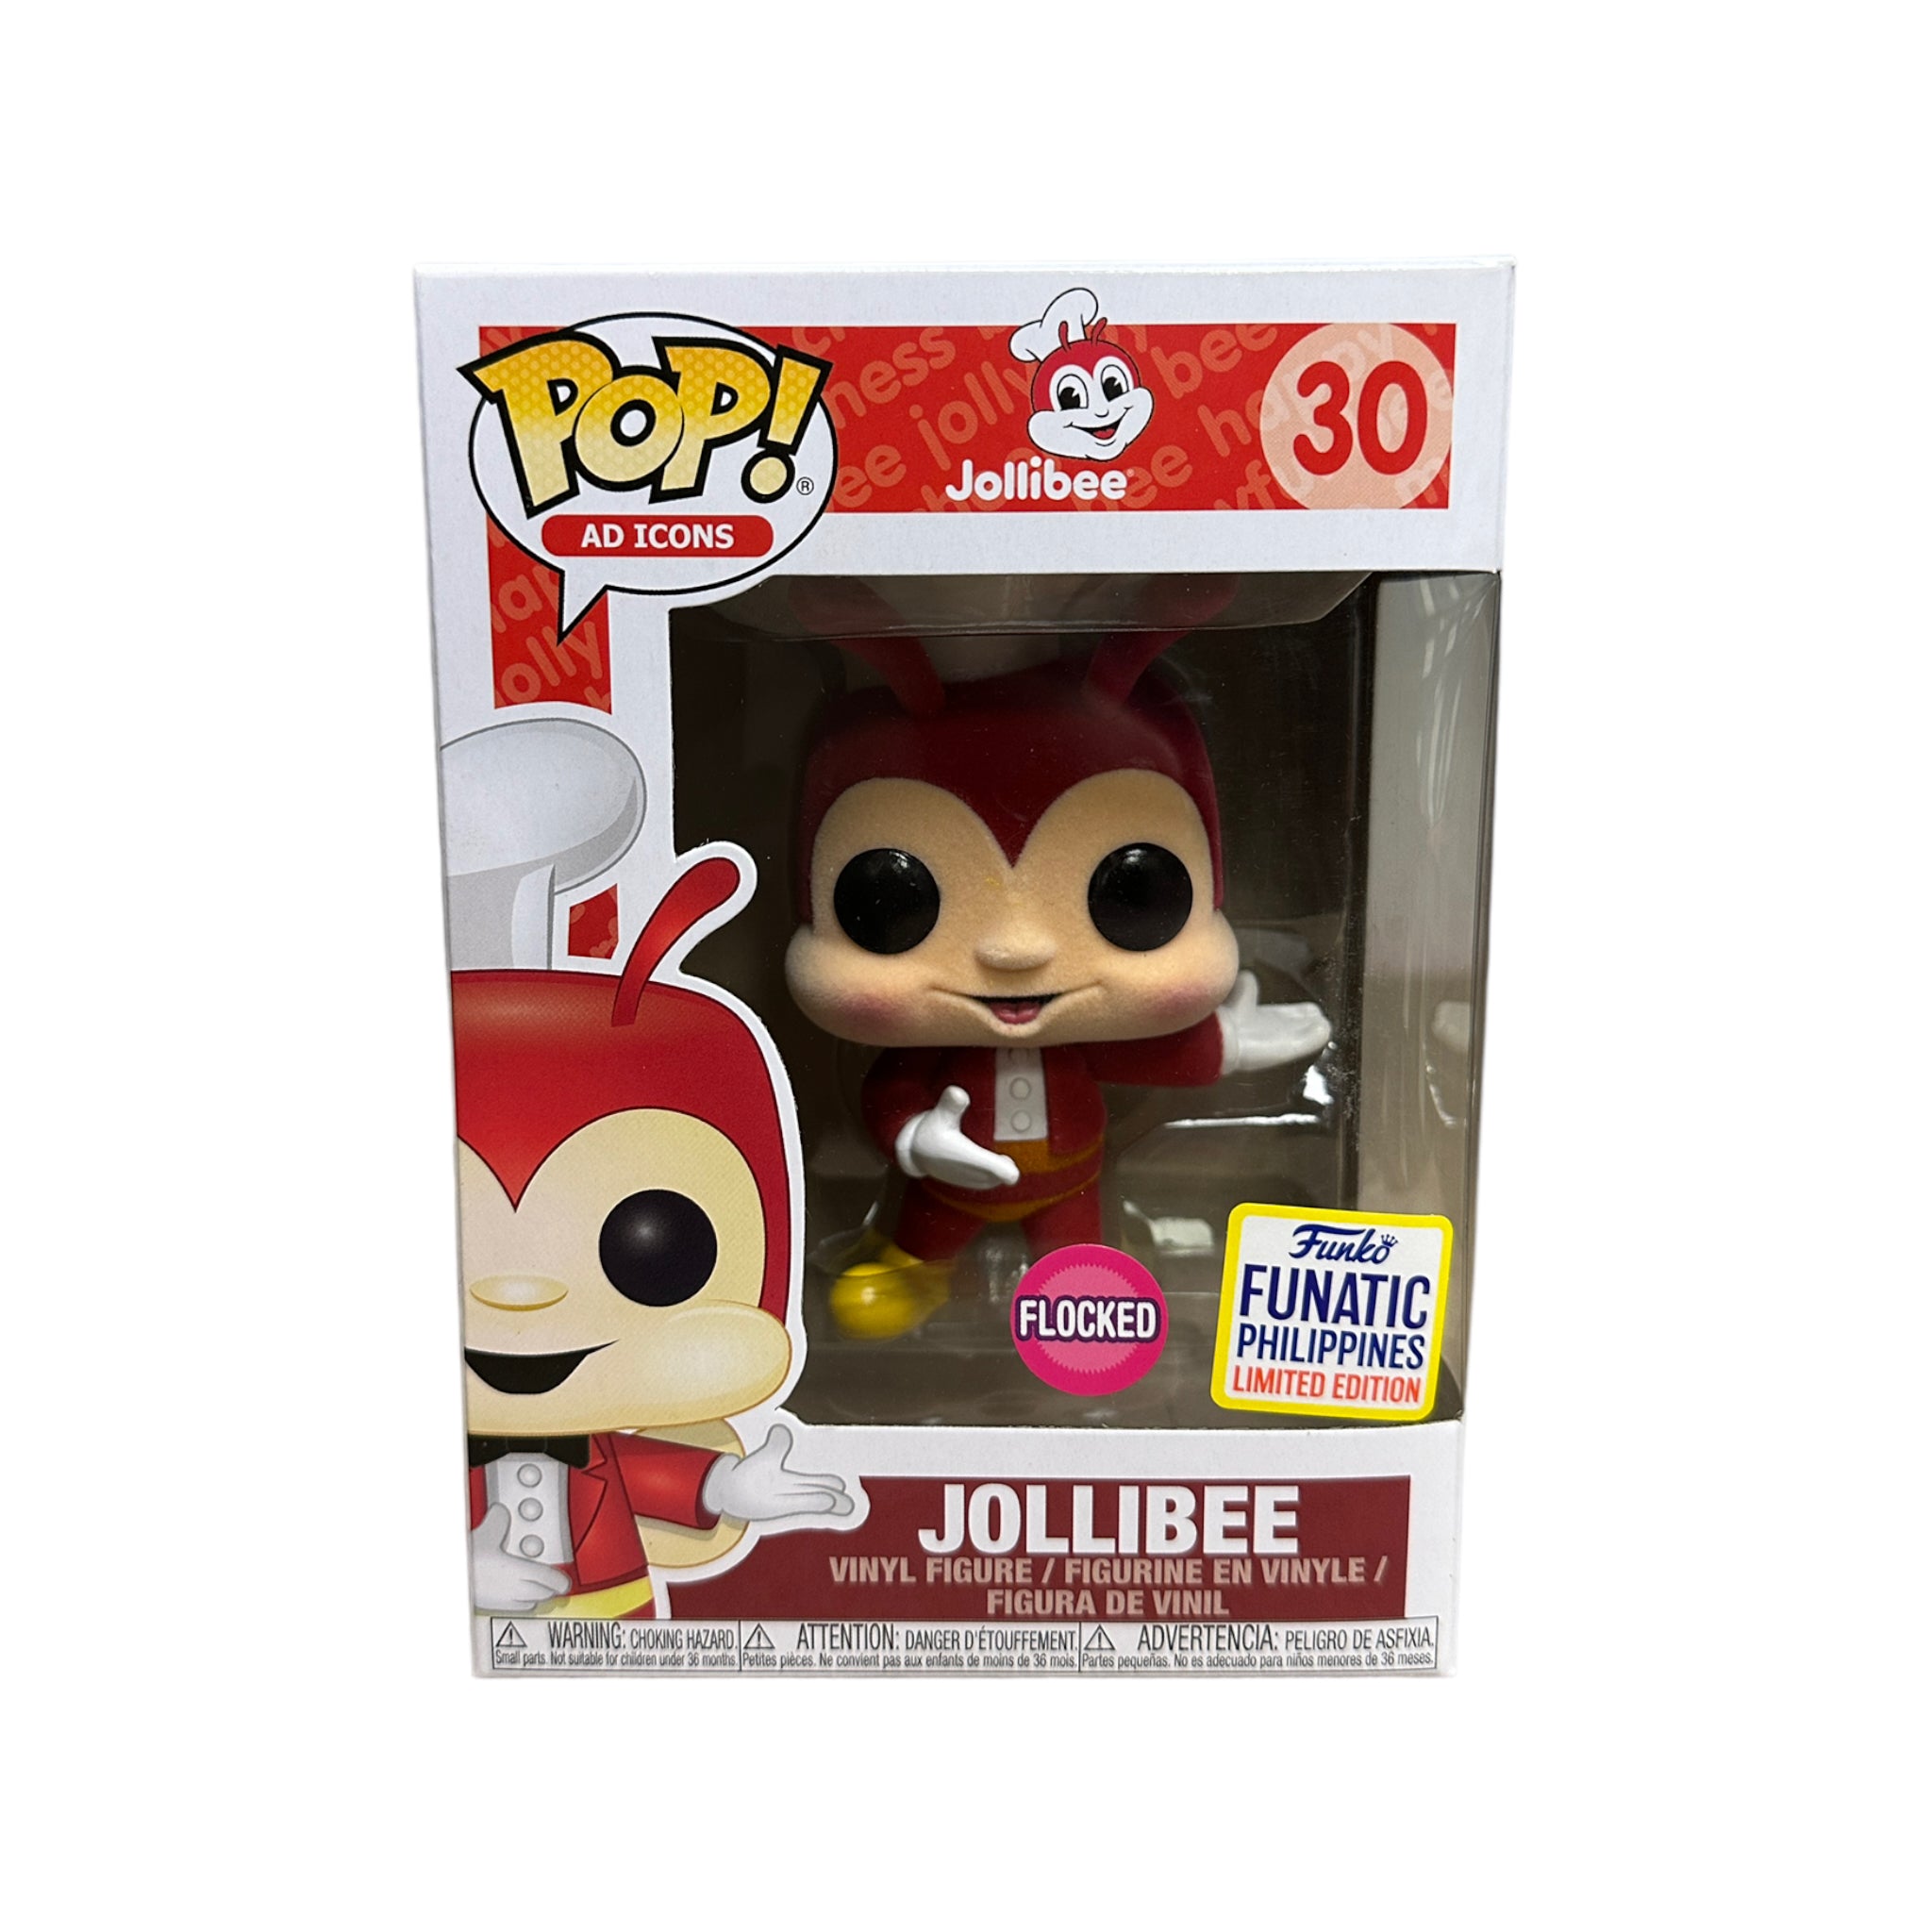 Jollibee #30 (Flocked) Funko Pop! - Ad Icons - ToyCon Philippines 2019 Exclusive - Condition 8/10